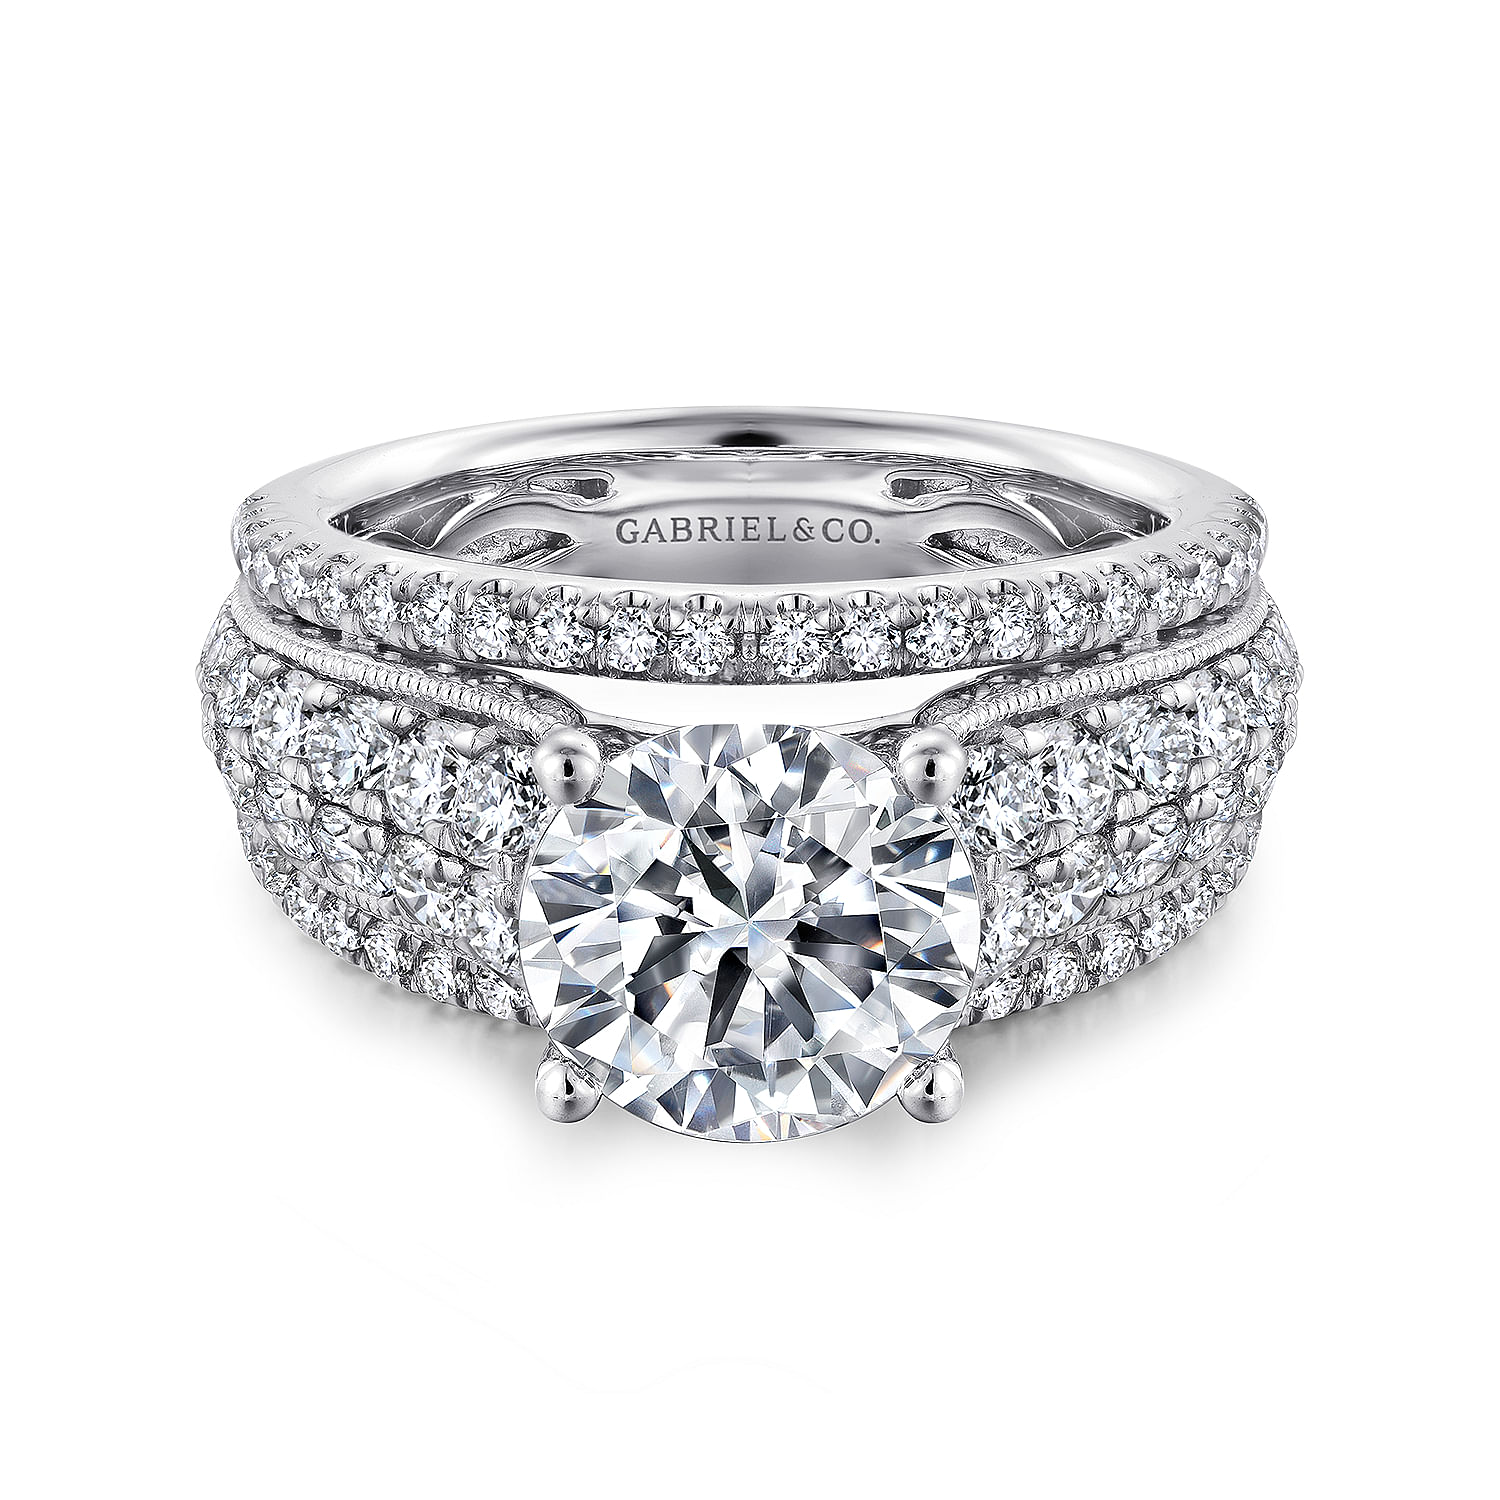 Jessa---14K-White-Gold-Round-Diamond-Engagement-Ring1